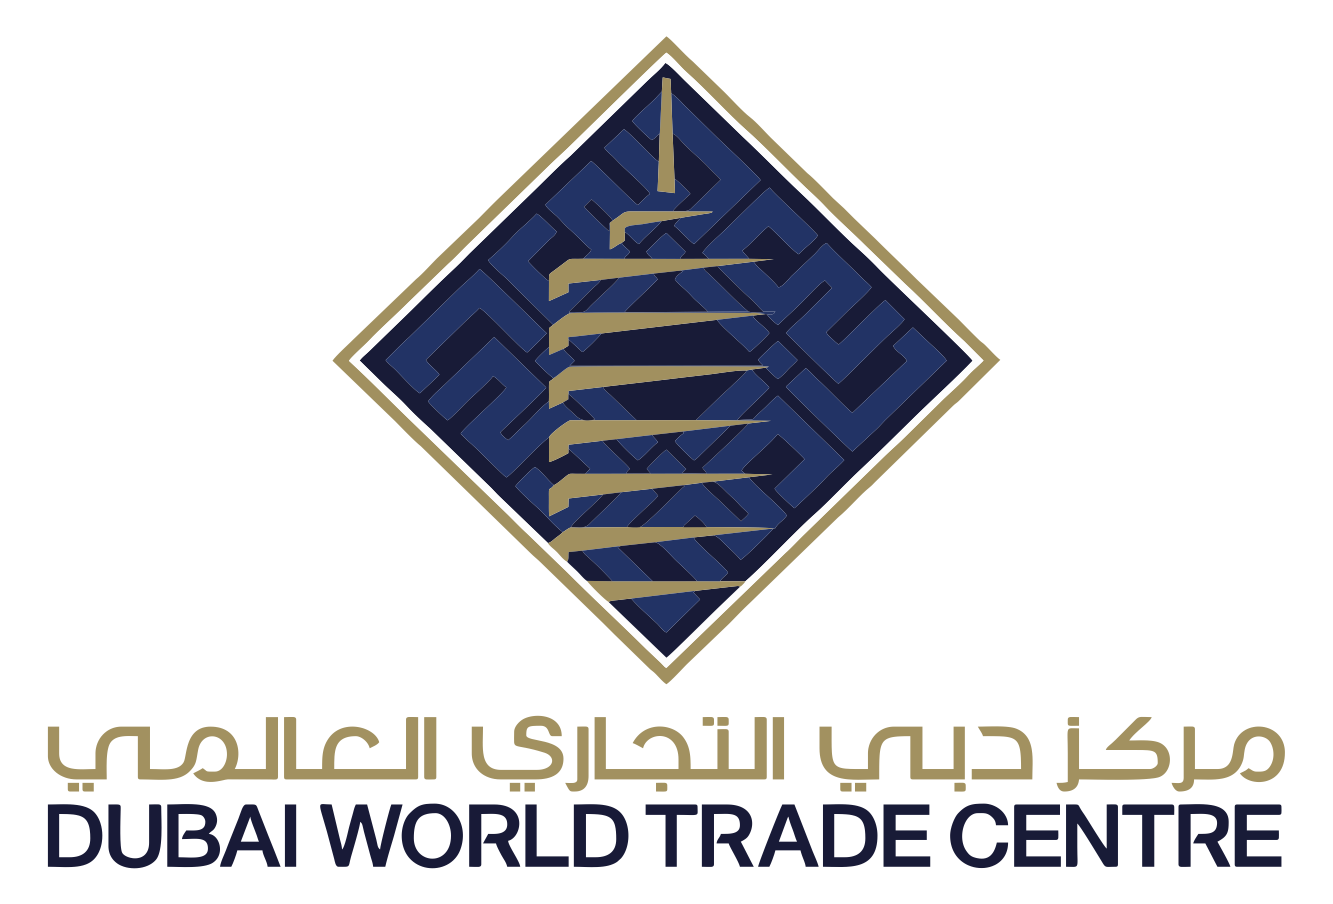 Dubai world trade centre logo